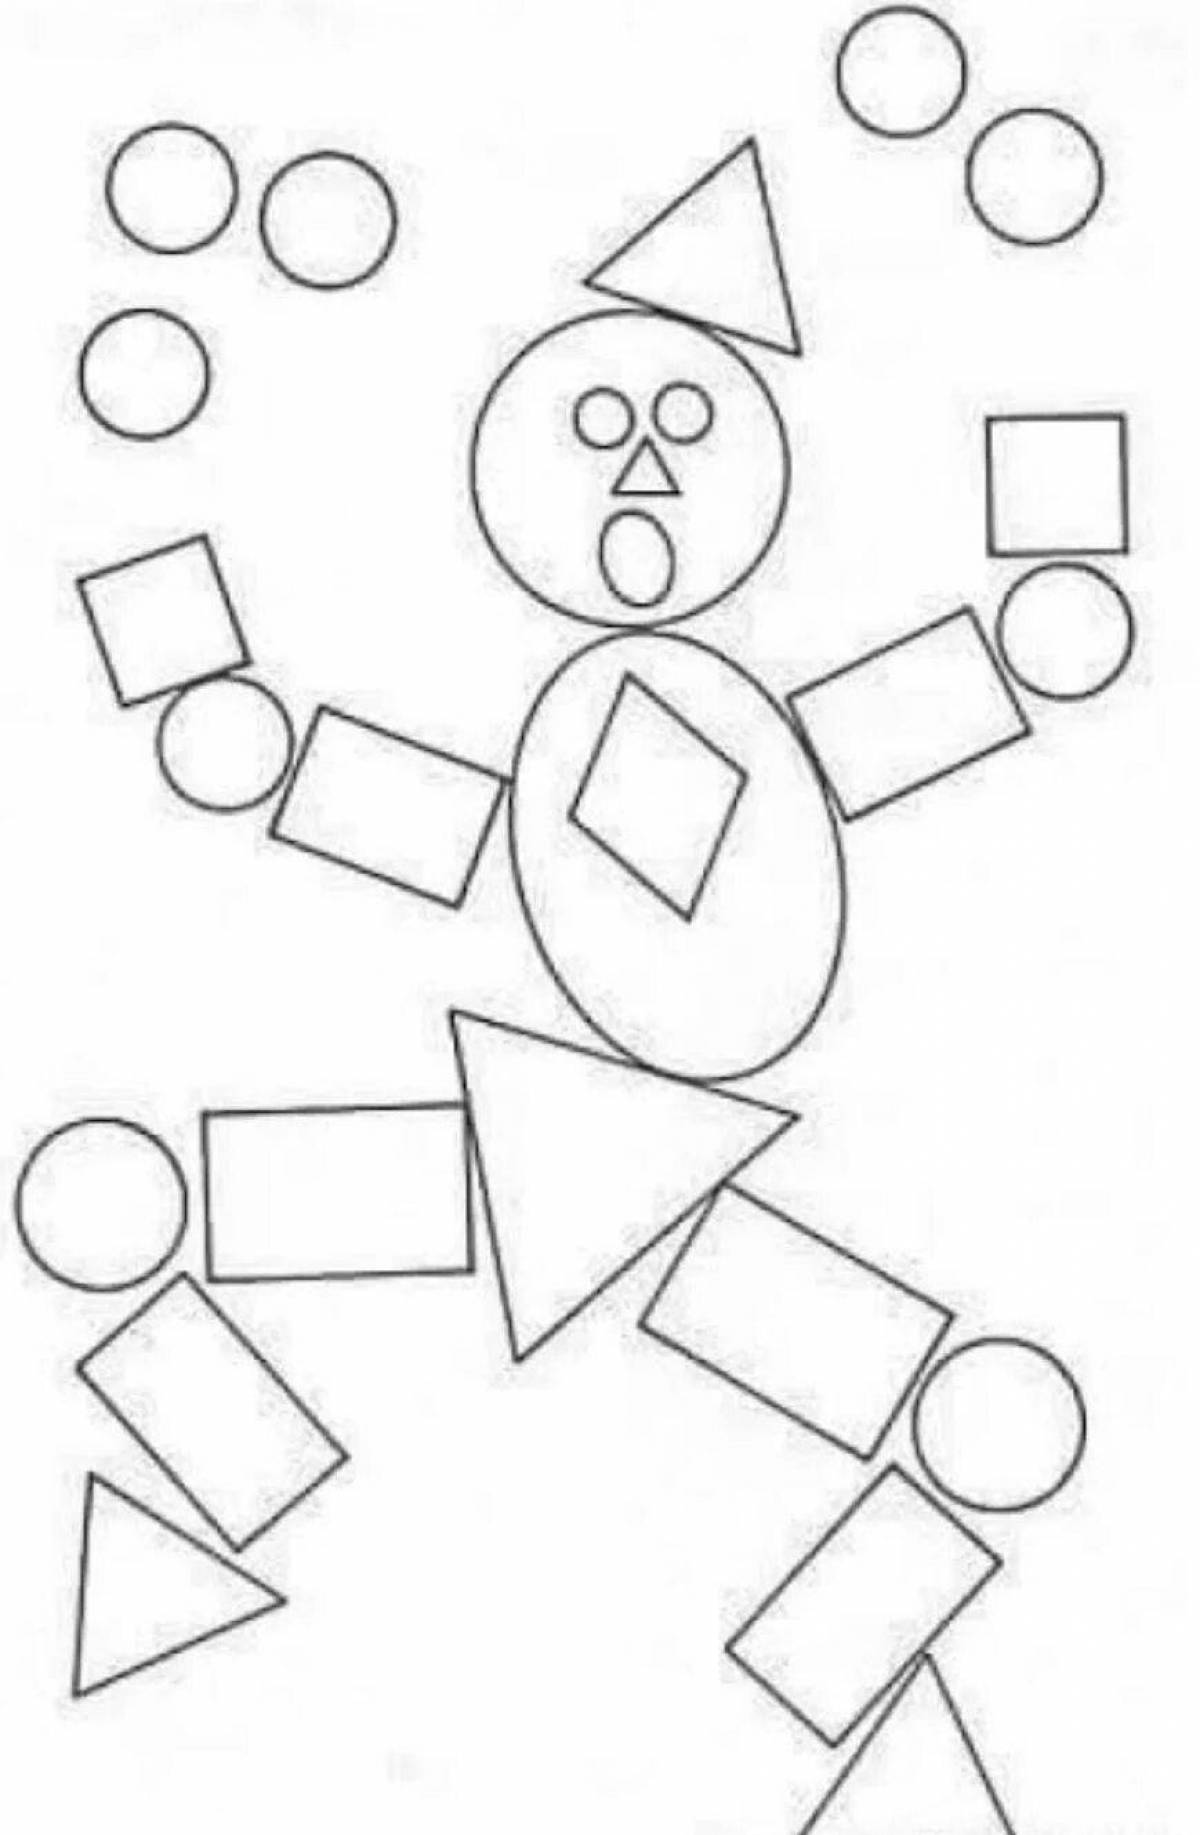 Geometric shapes for preschoolers #1